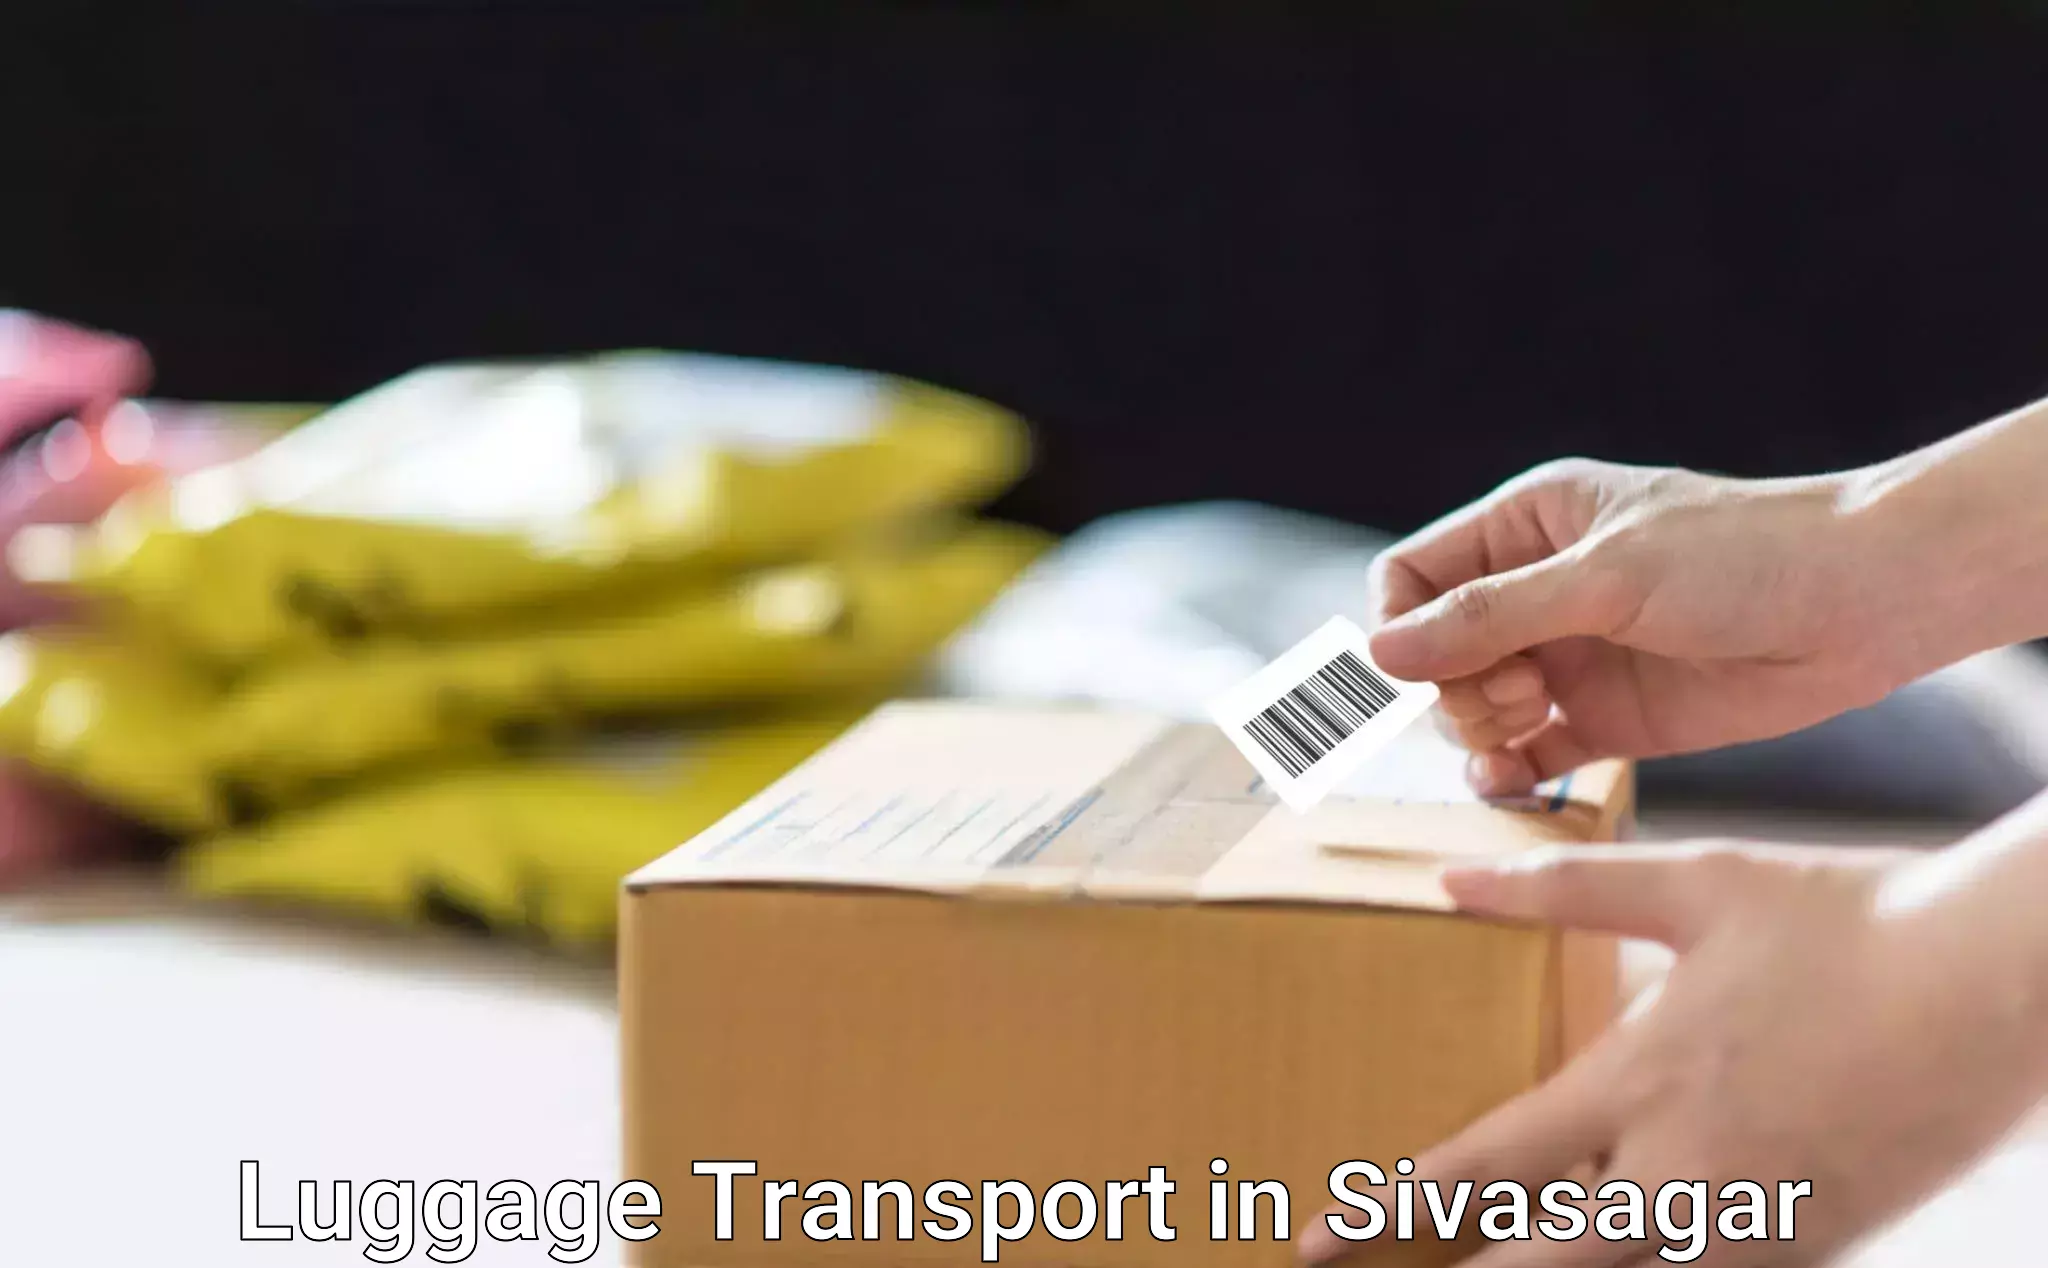 Luggage transport service in Sivasagar